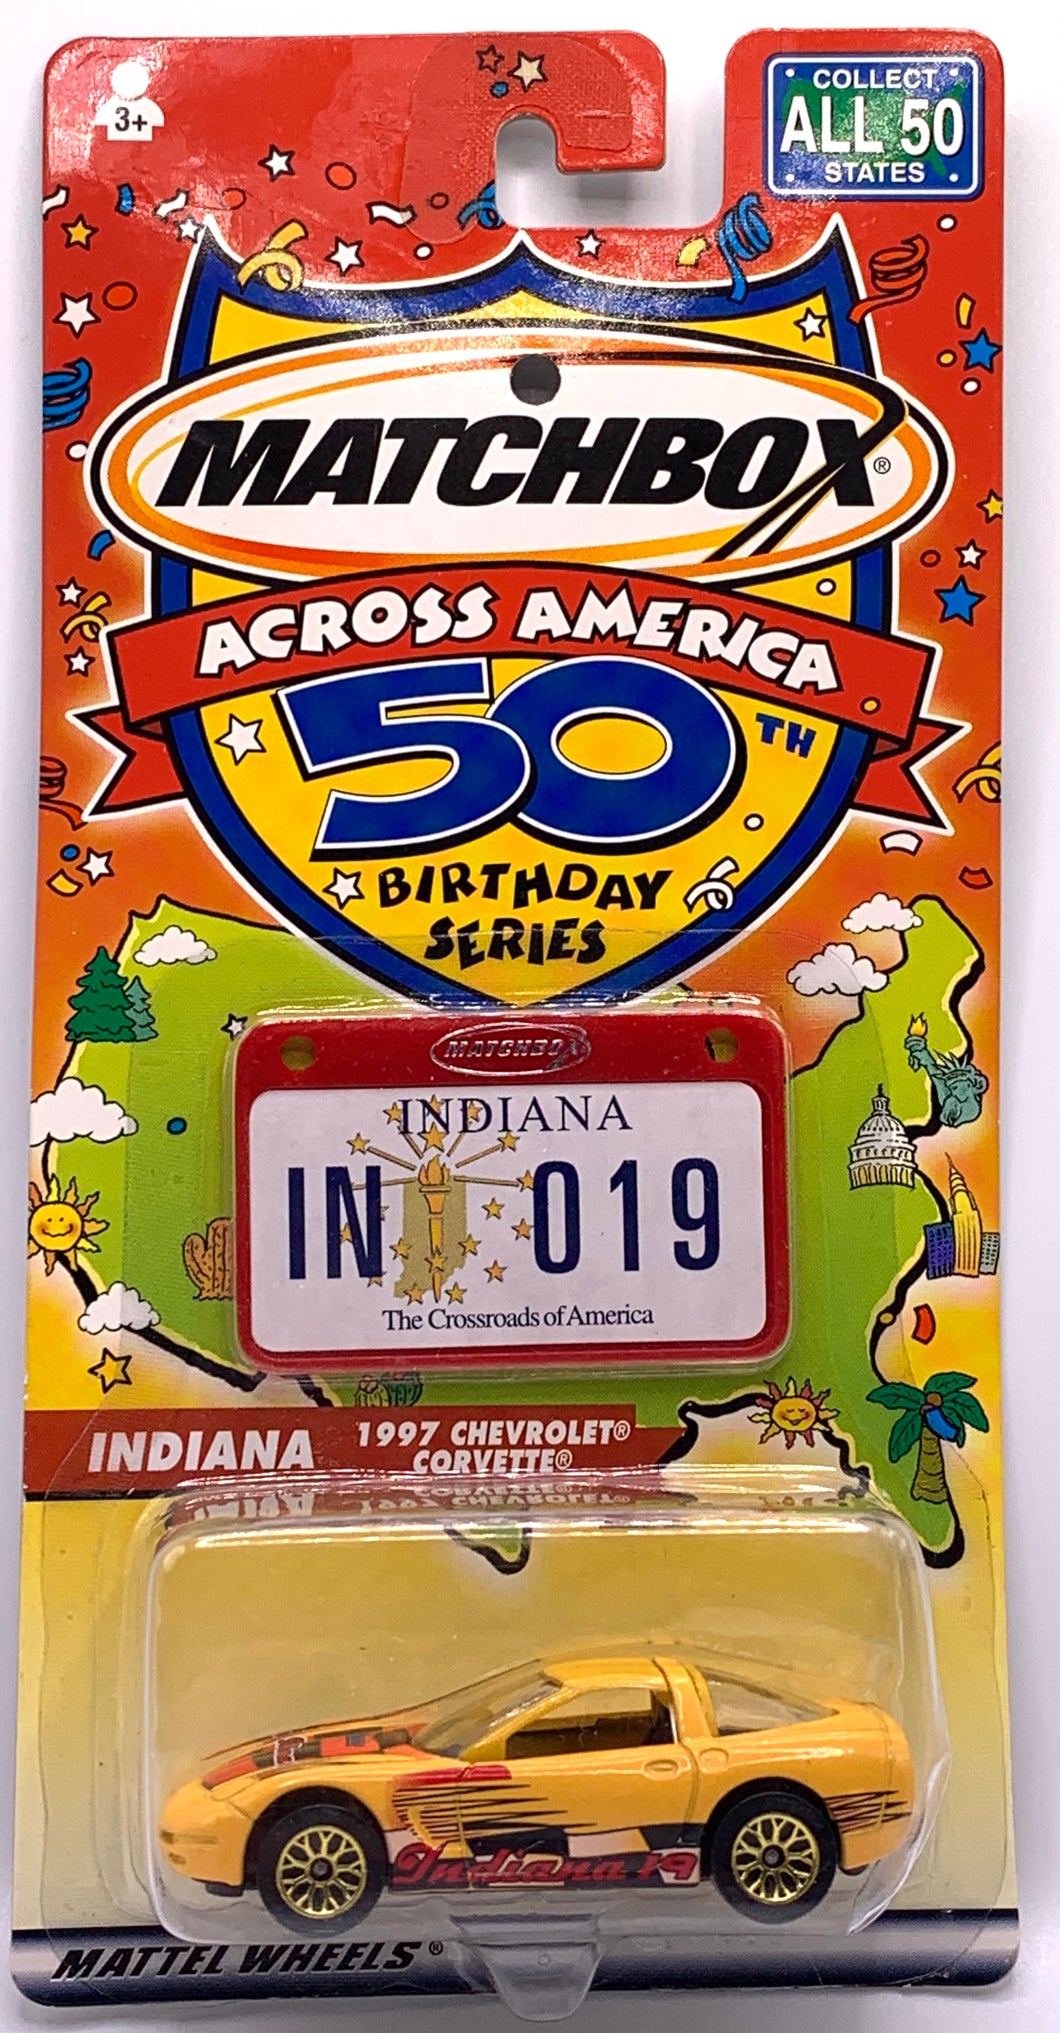 INDIANA Indiana 19, Hoosier 1997 Chevy Corvette Coupe 1/60  Matchbox Across America 50th Birthday Series